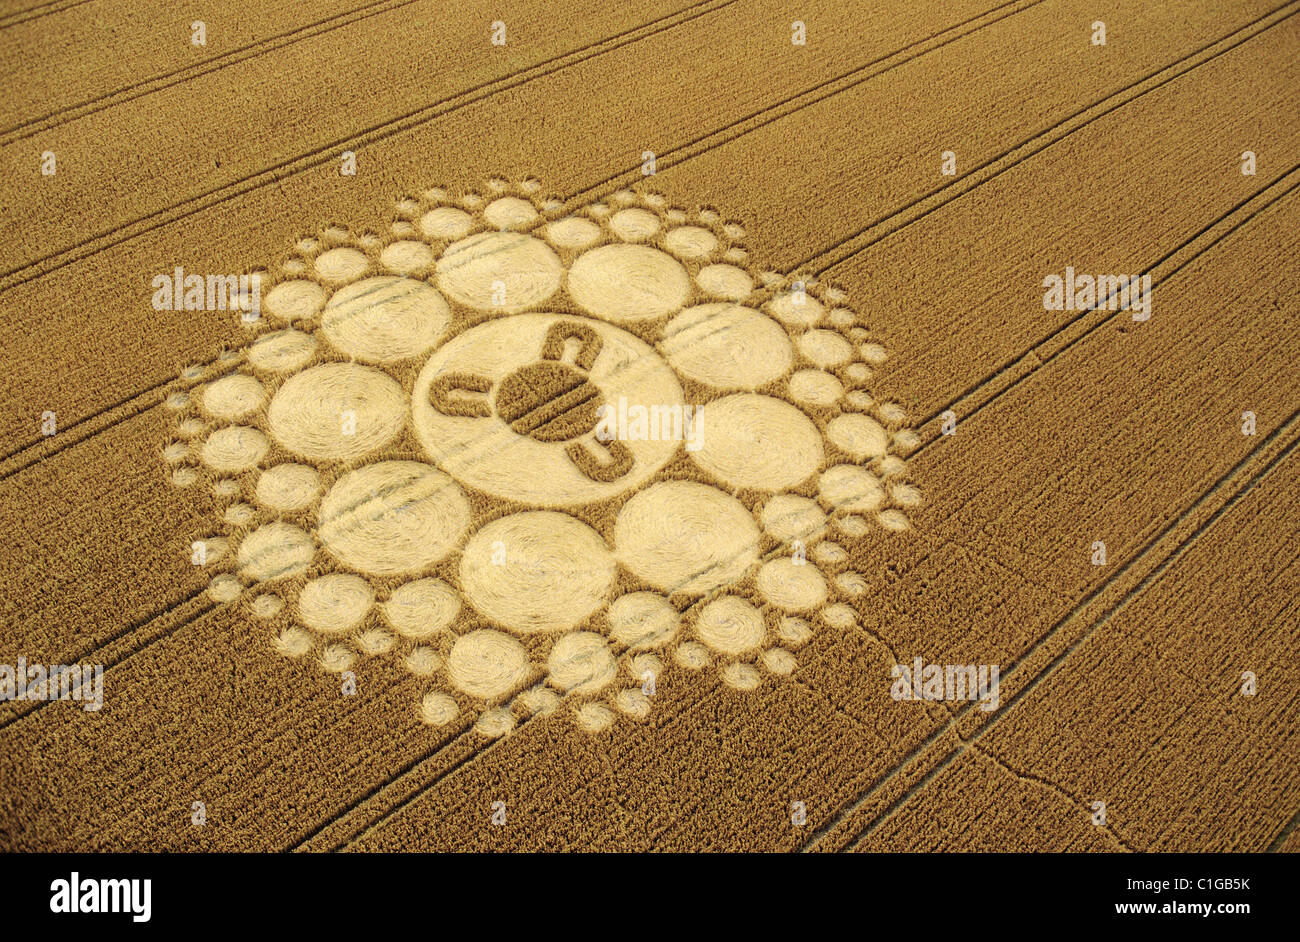 United Kingdom, Wiltshire, crop-circles (aerial view) Stock Photo